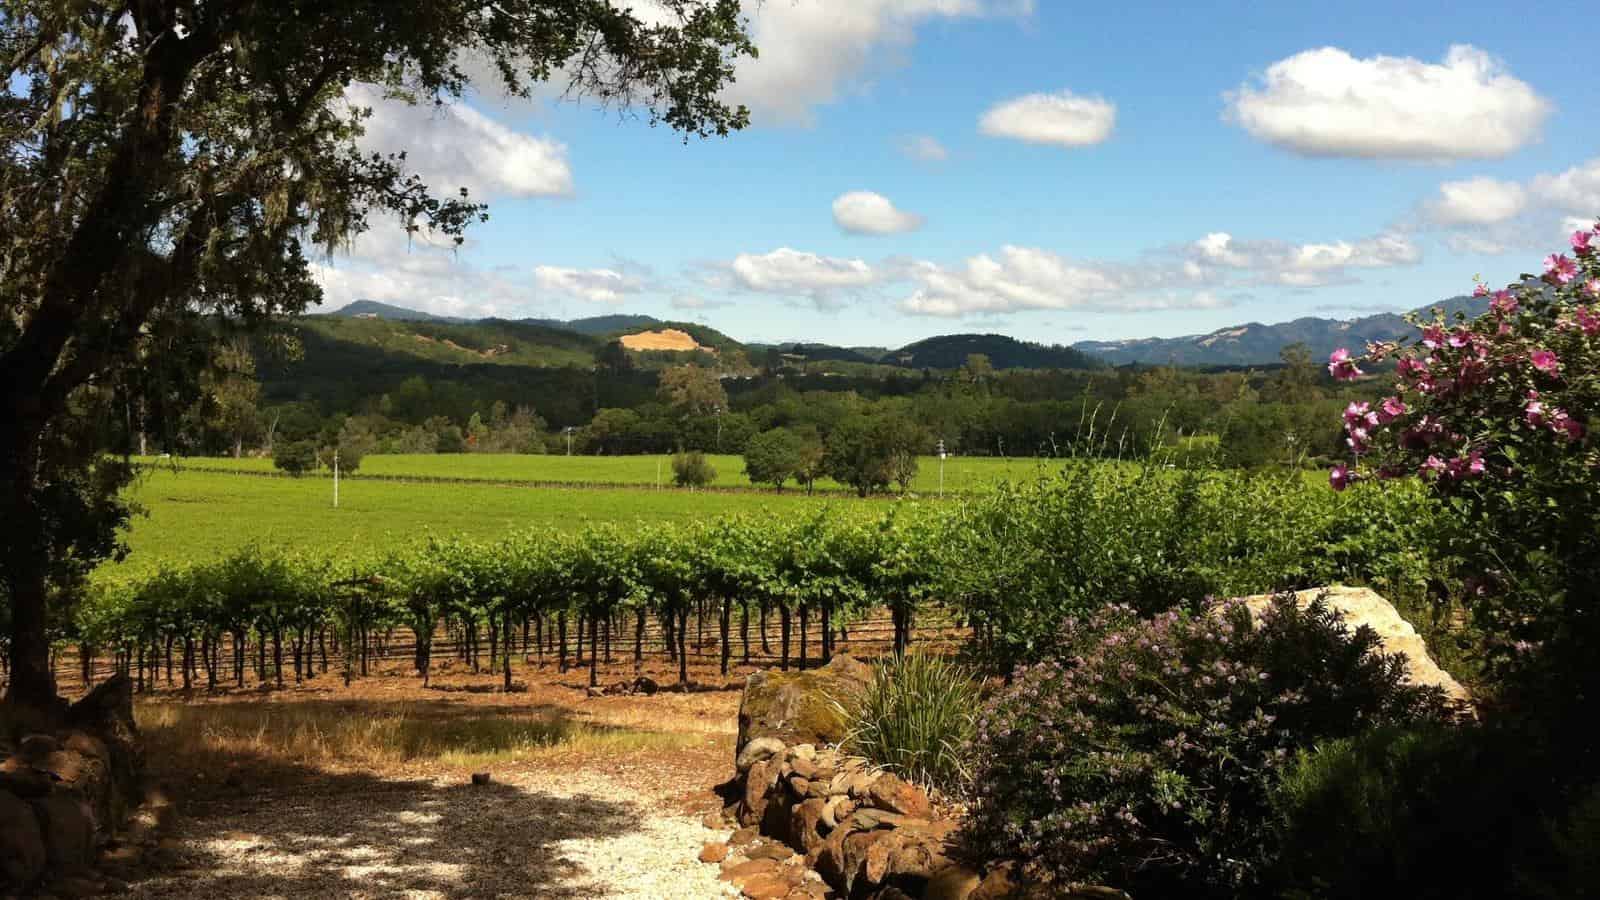 Sonoma Valley winaries view of hills and lush vegitation